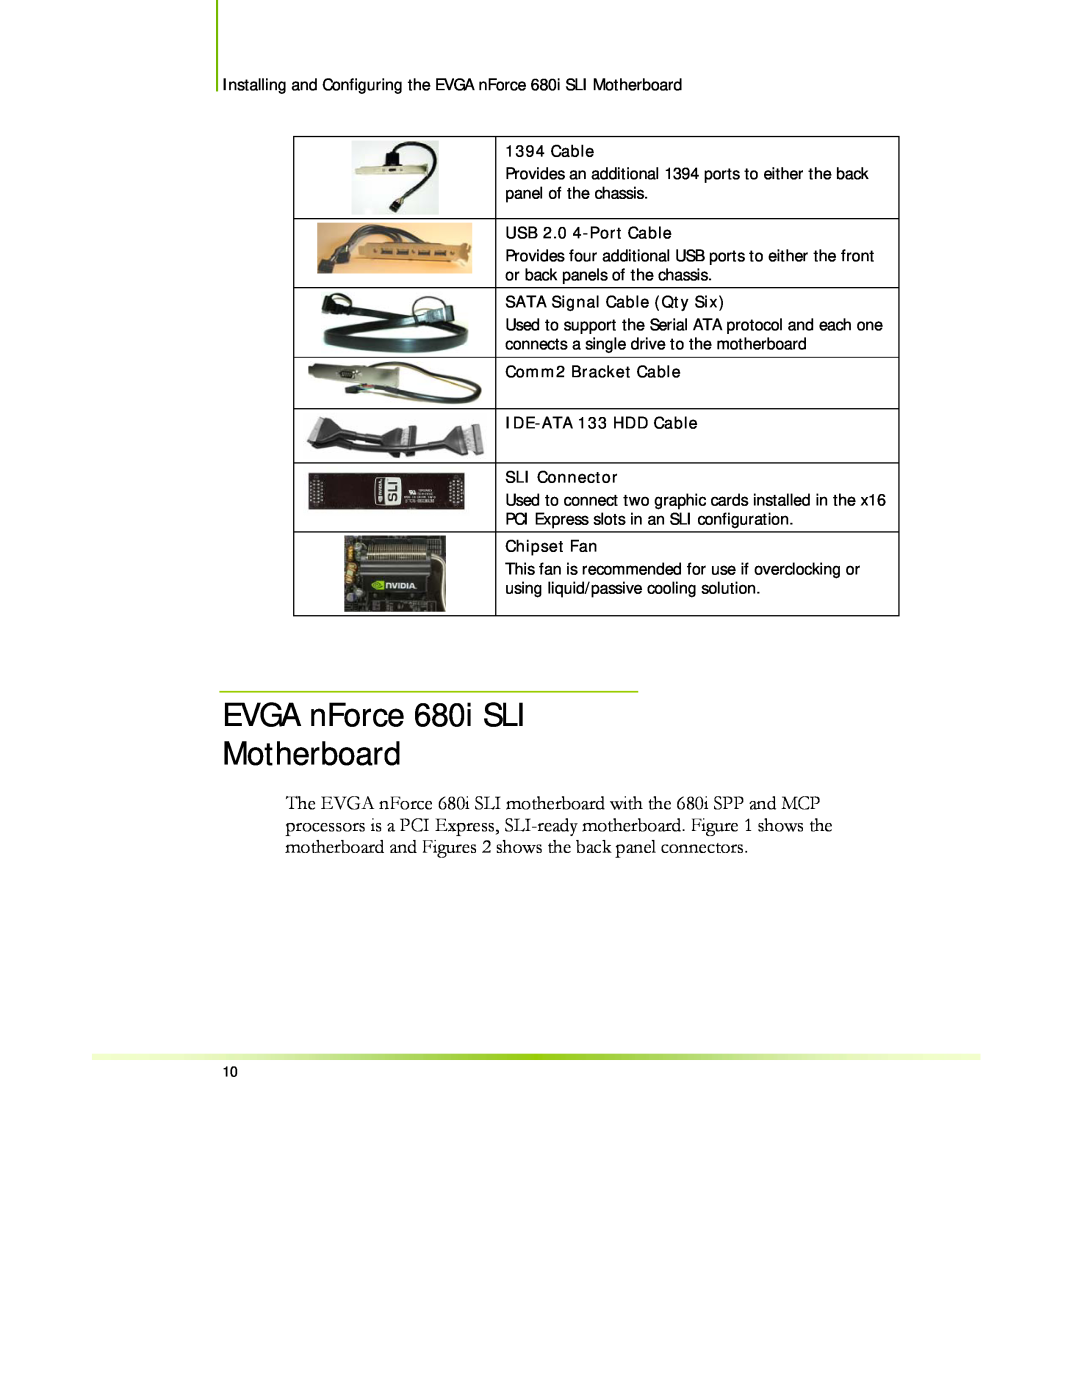 EVGA 122-CK-NF68-XX EVGA nForce 680i SLI Motherboard, USB 2.0 4-Port Cable, SATA Signal Cable Qty Six, Chipset Fan 